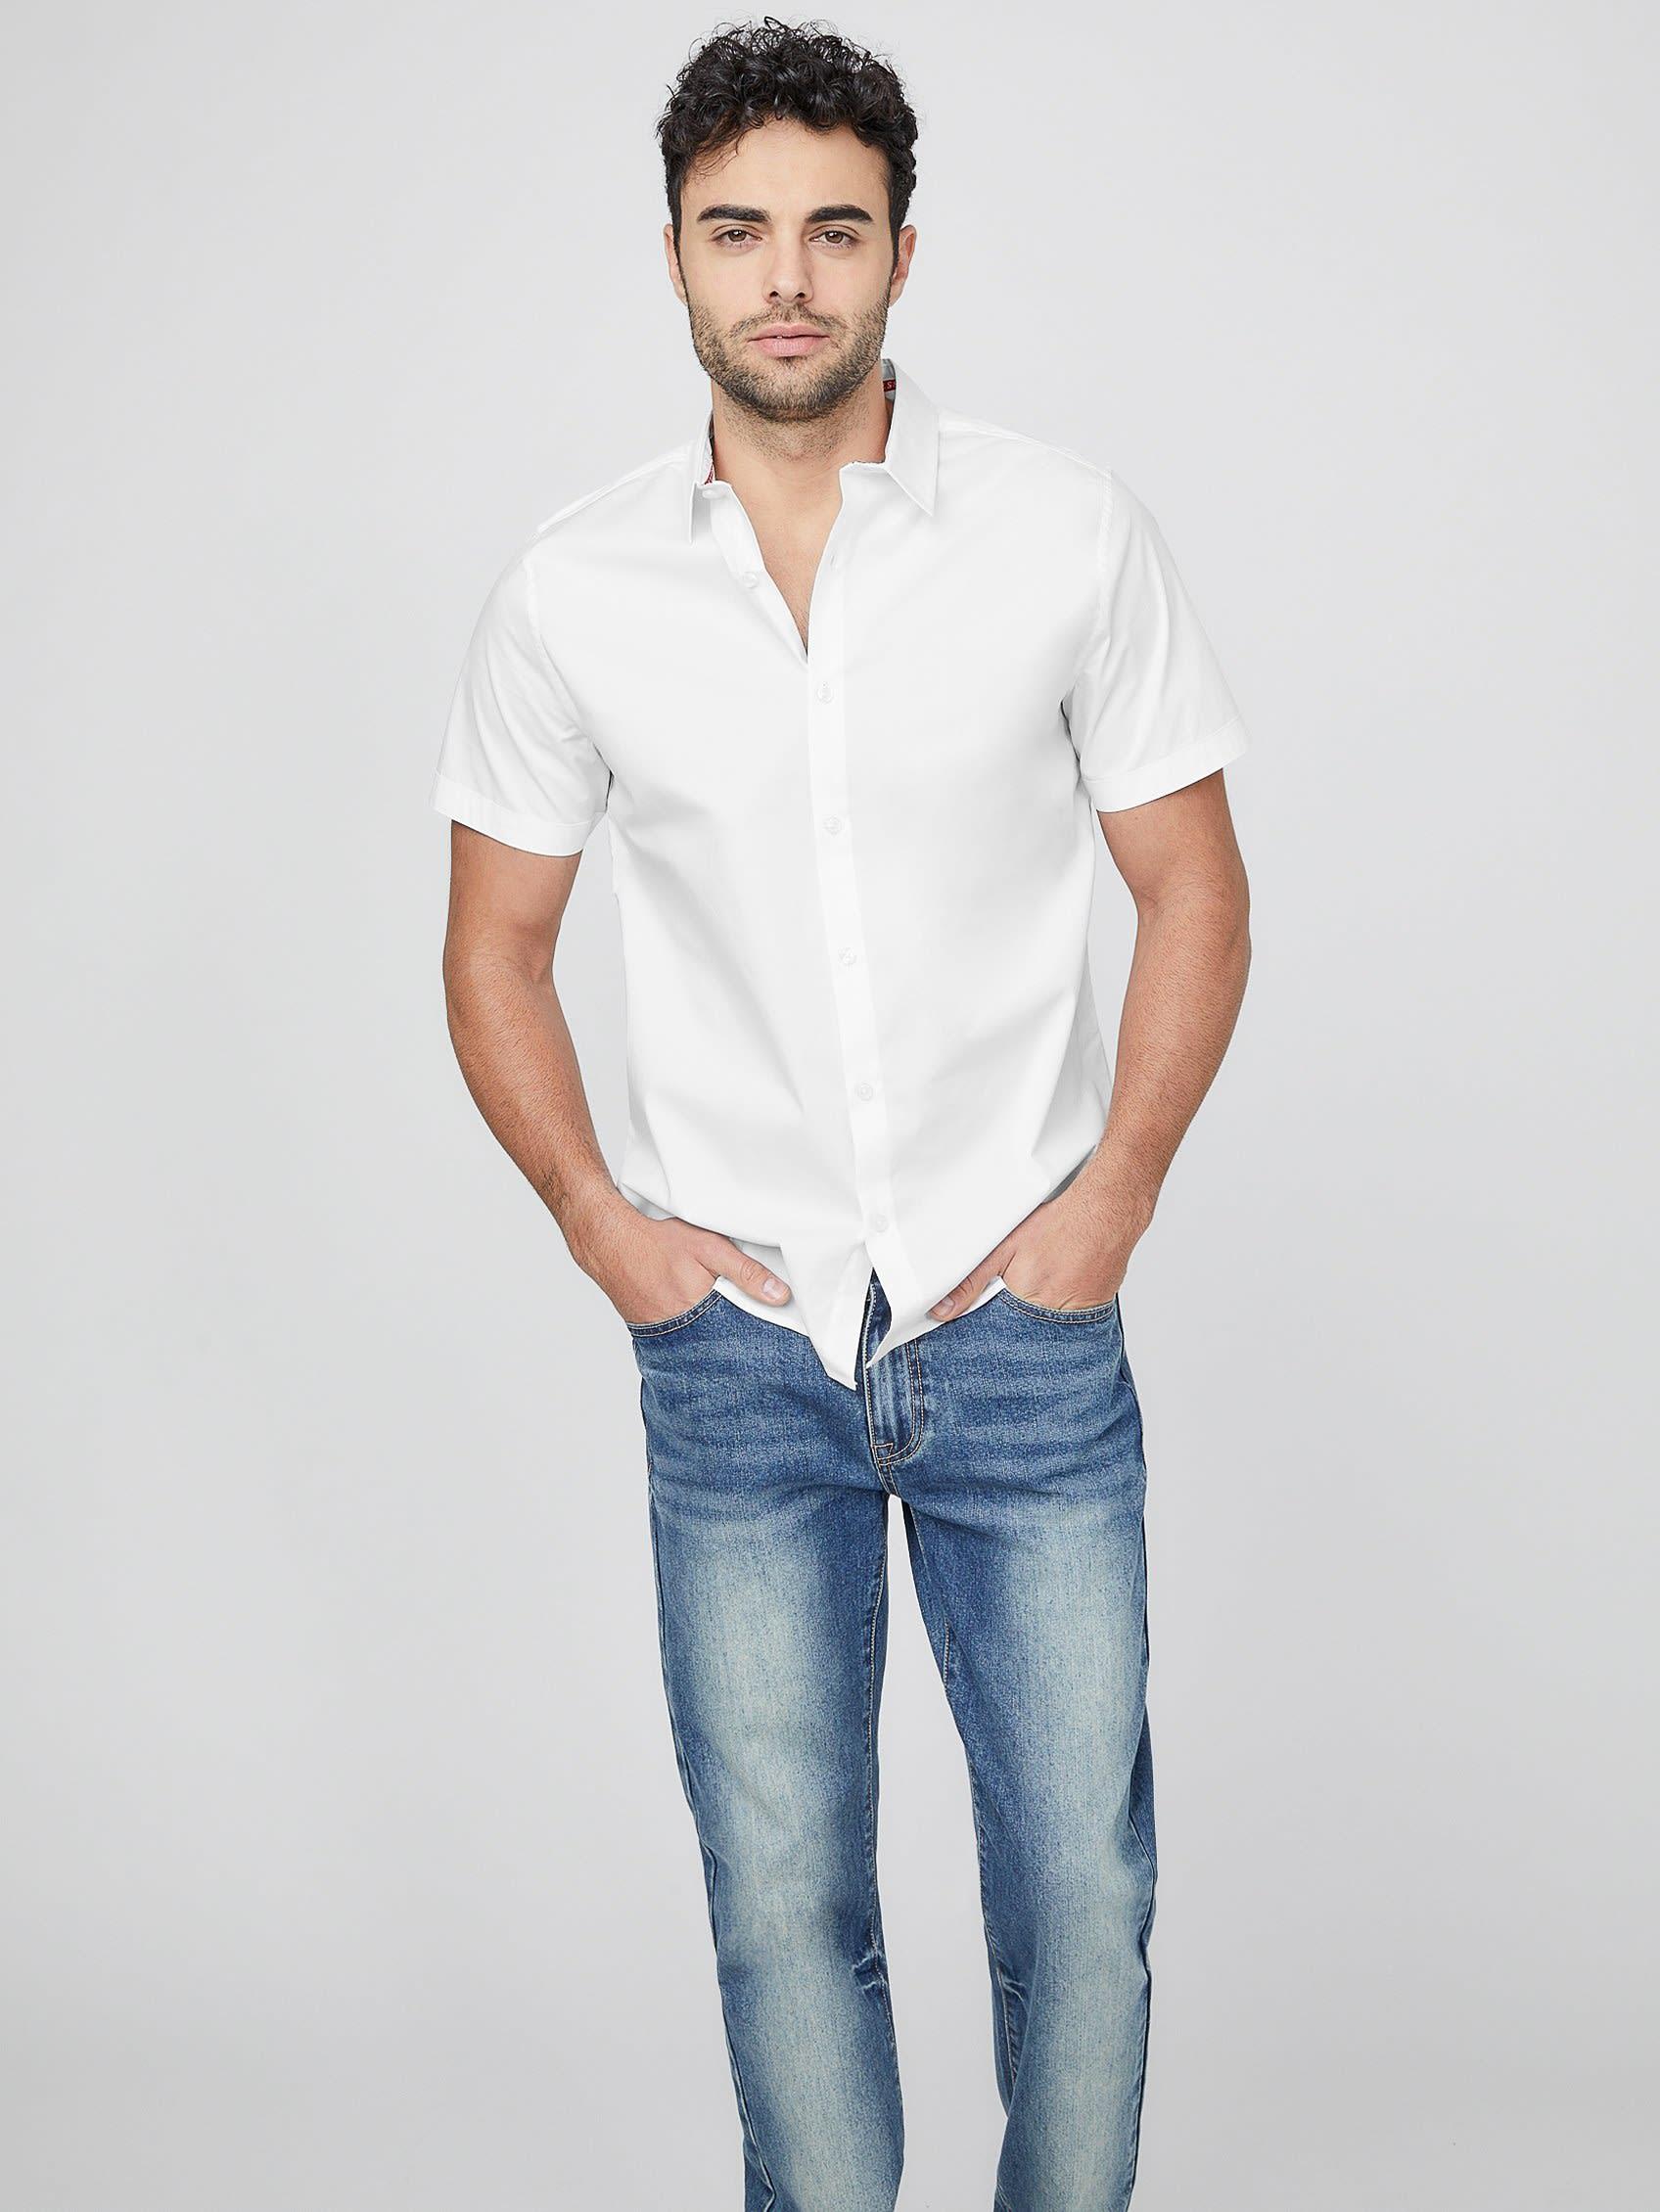 Guess Factory Darrow Regular Short-sleeve Shirt in White for Men